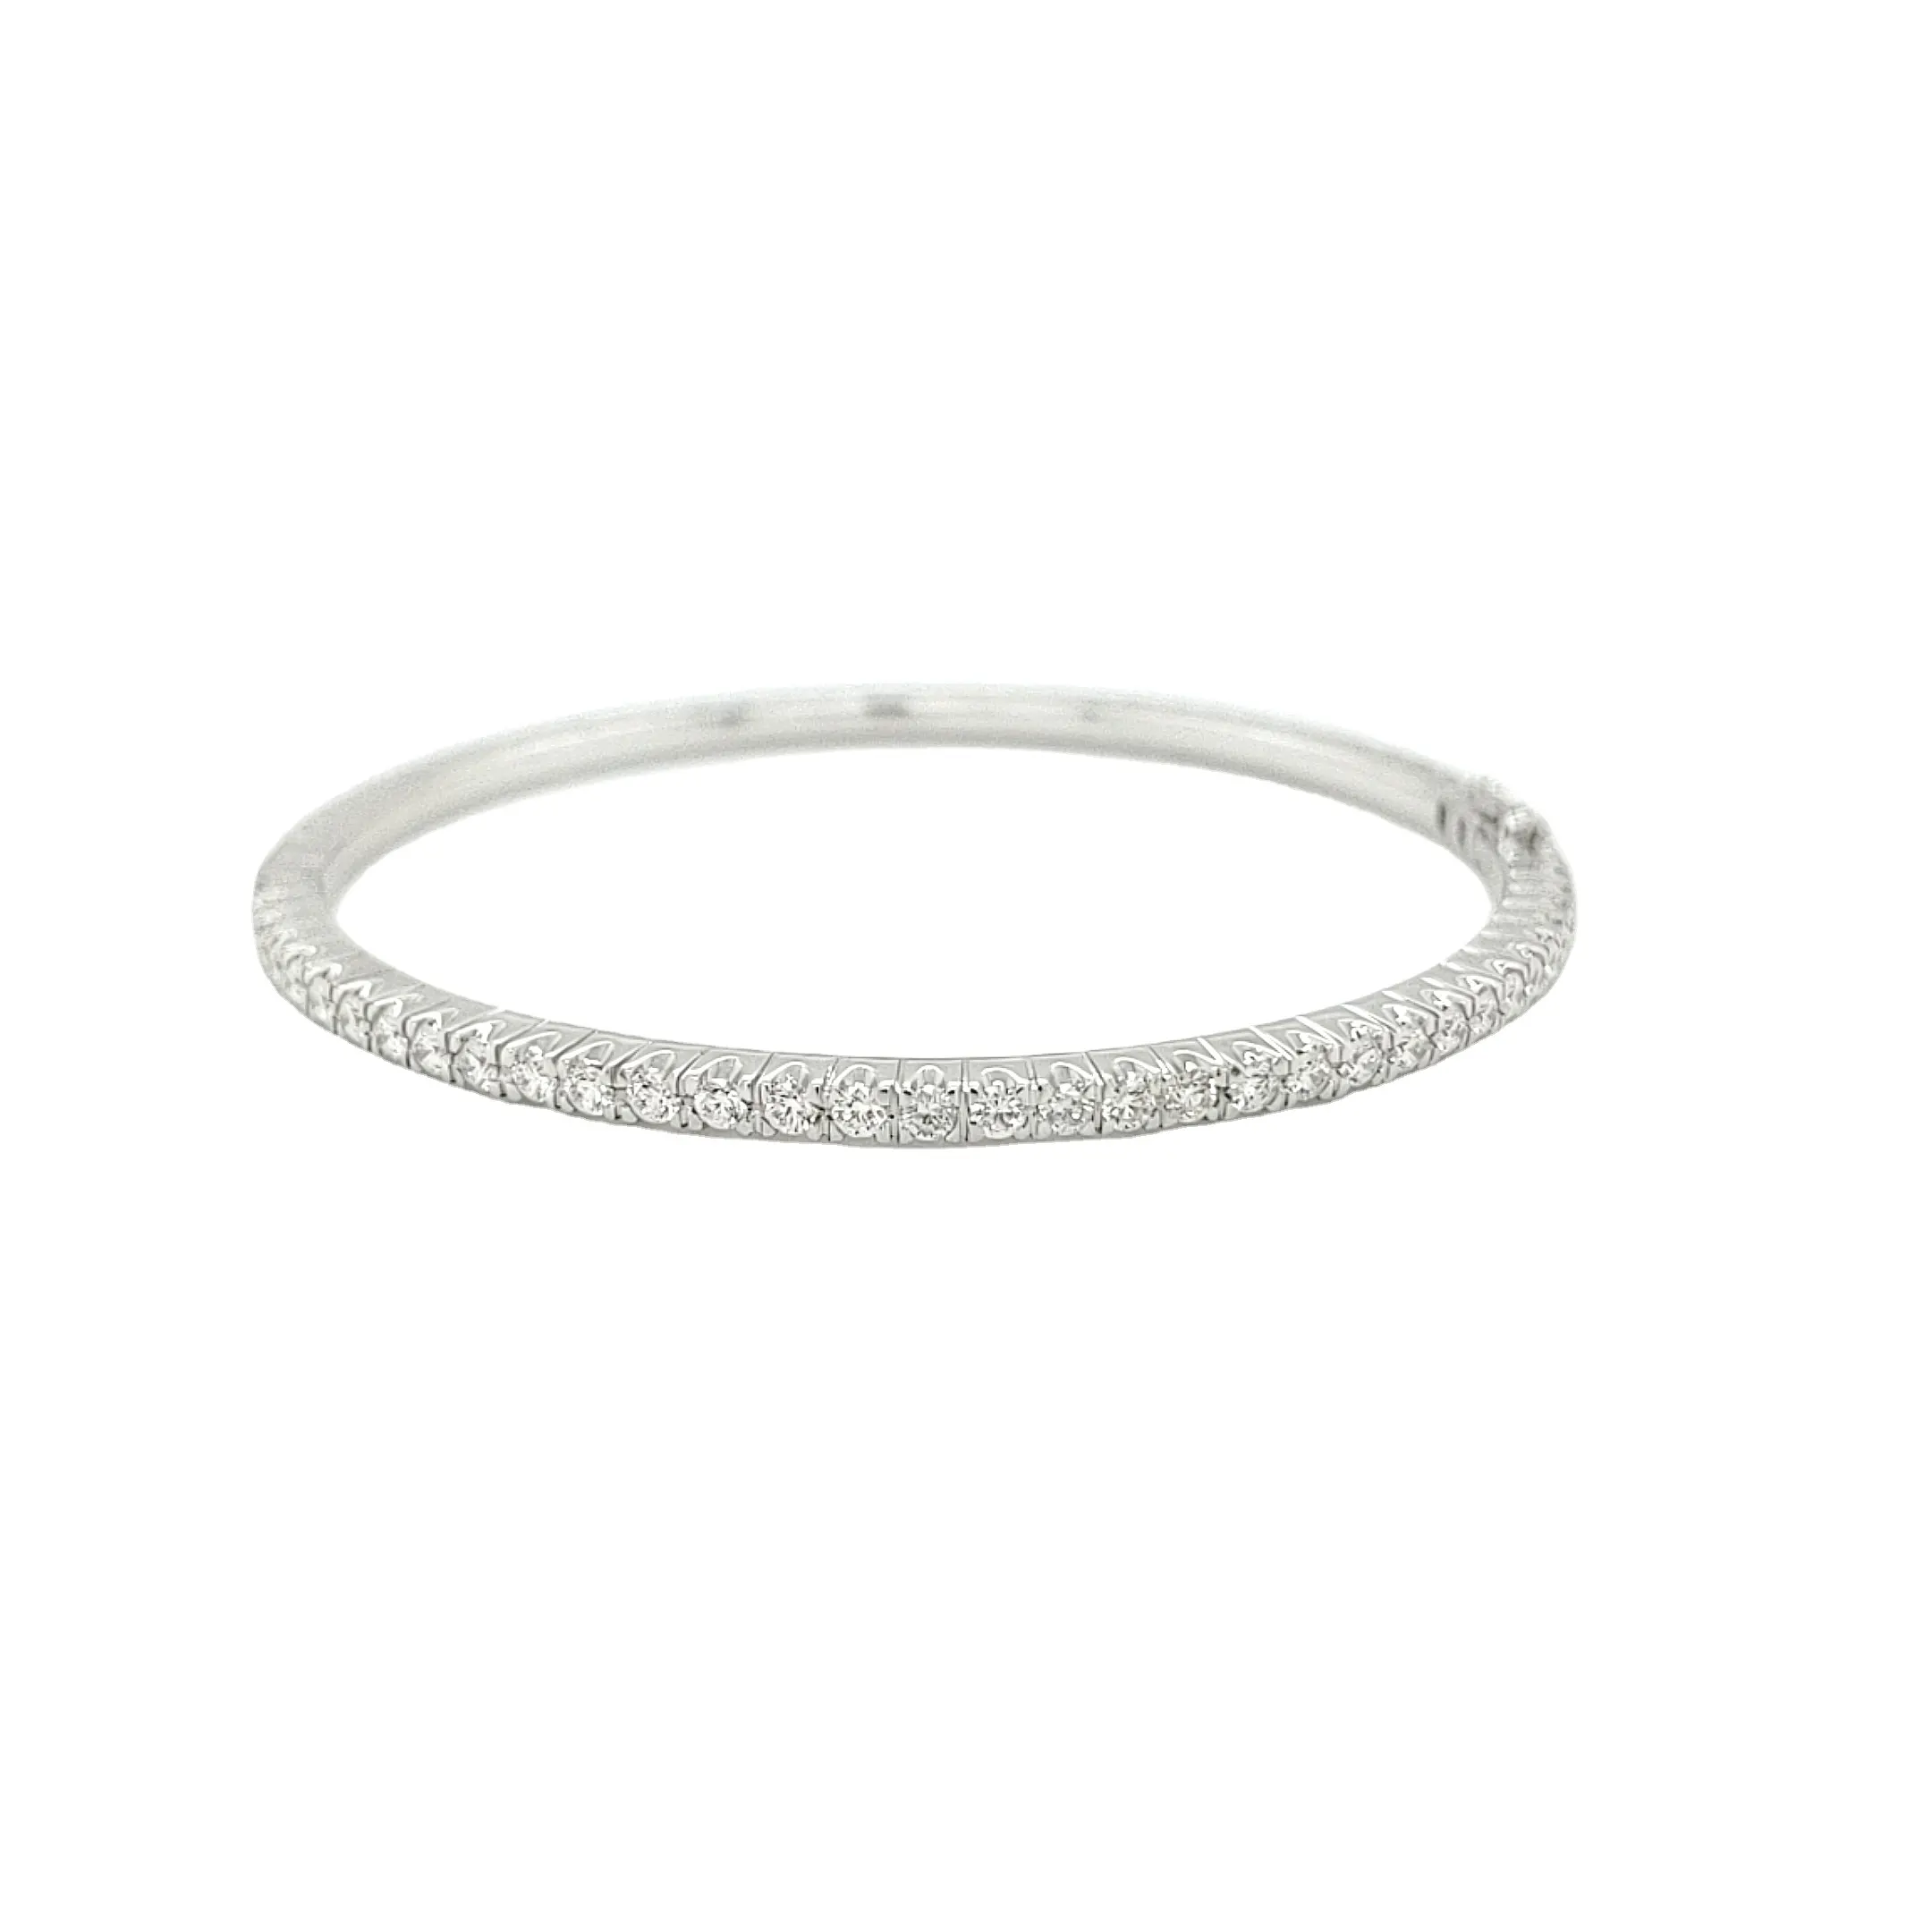 Fashion Design 18K White Gold Set With Round Brilliant Cut Real Natural Diamond Jewelry Bangles